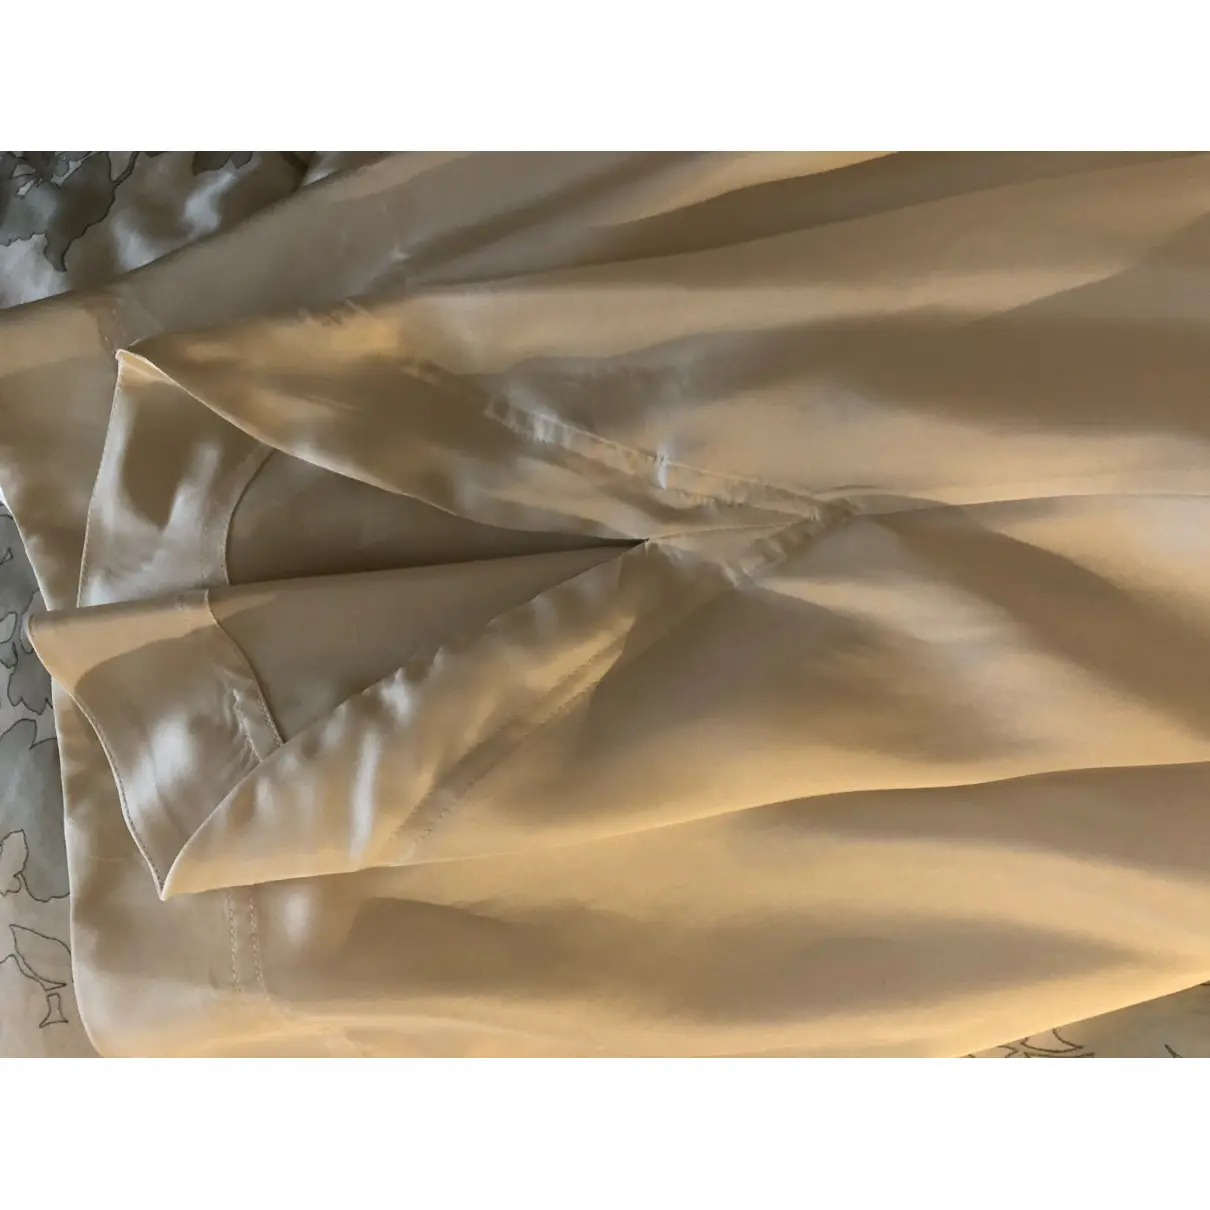 Buy by Malene Birger Silk maxi skirt online